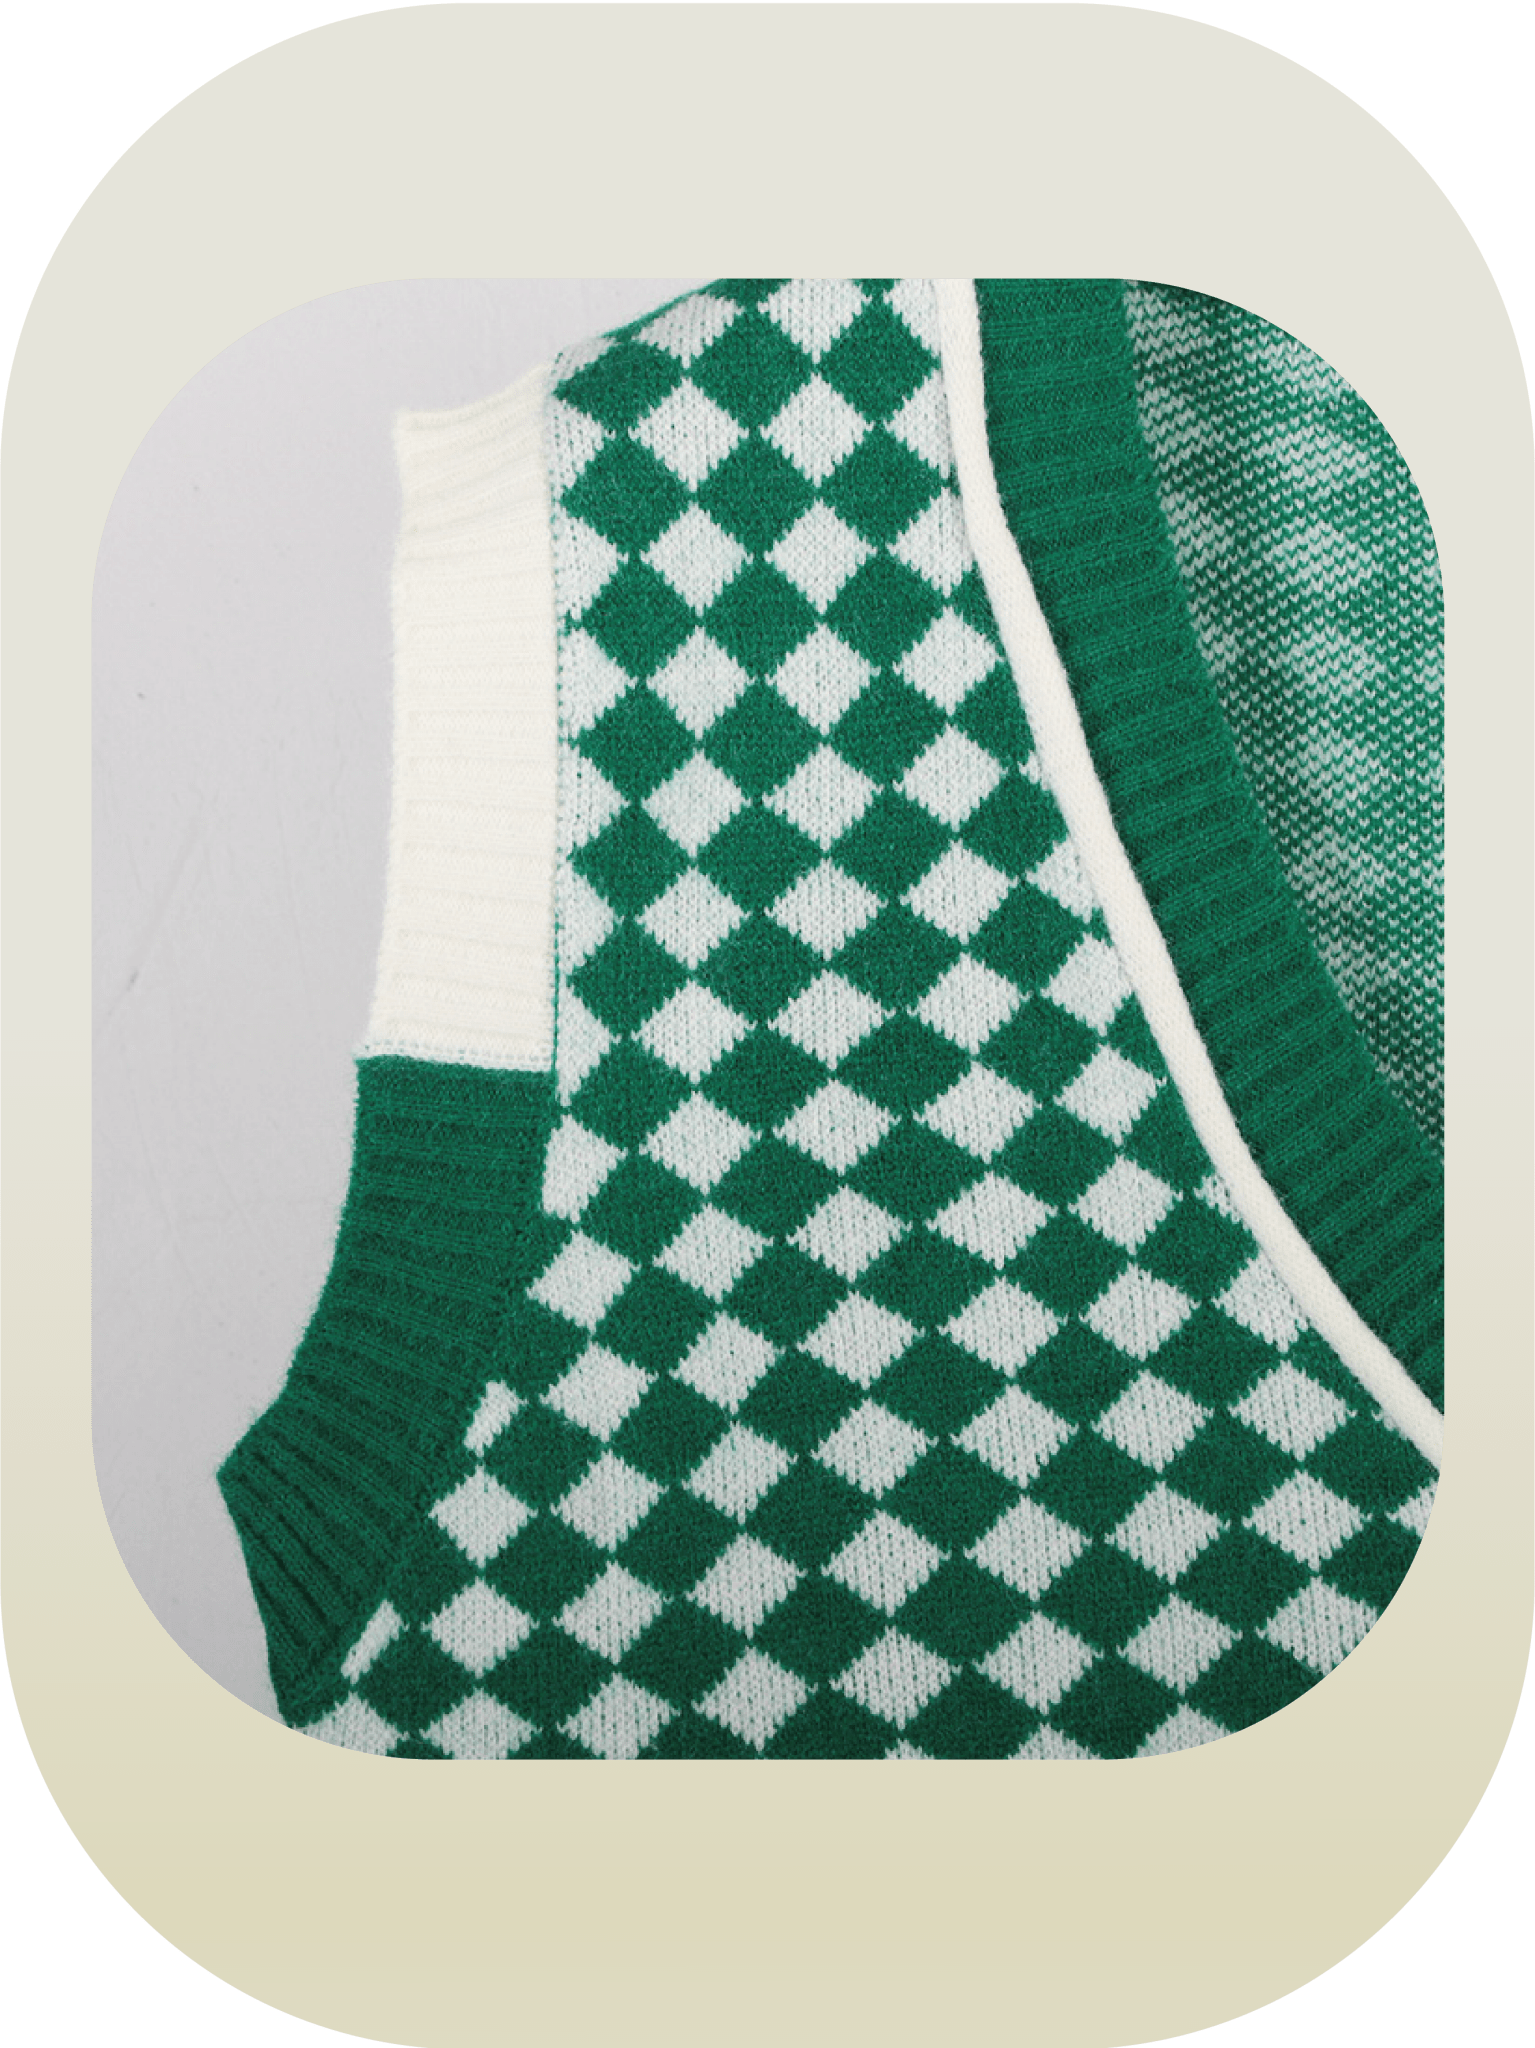 Retro Green Motif Knit Vest - LOVE POMME POMME